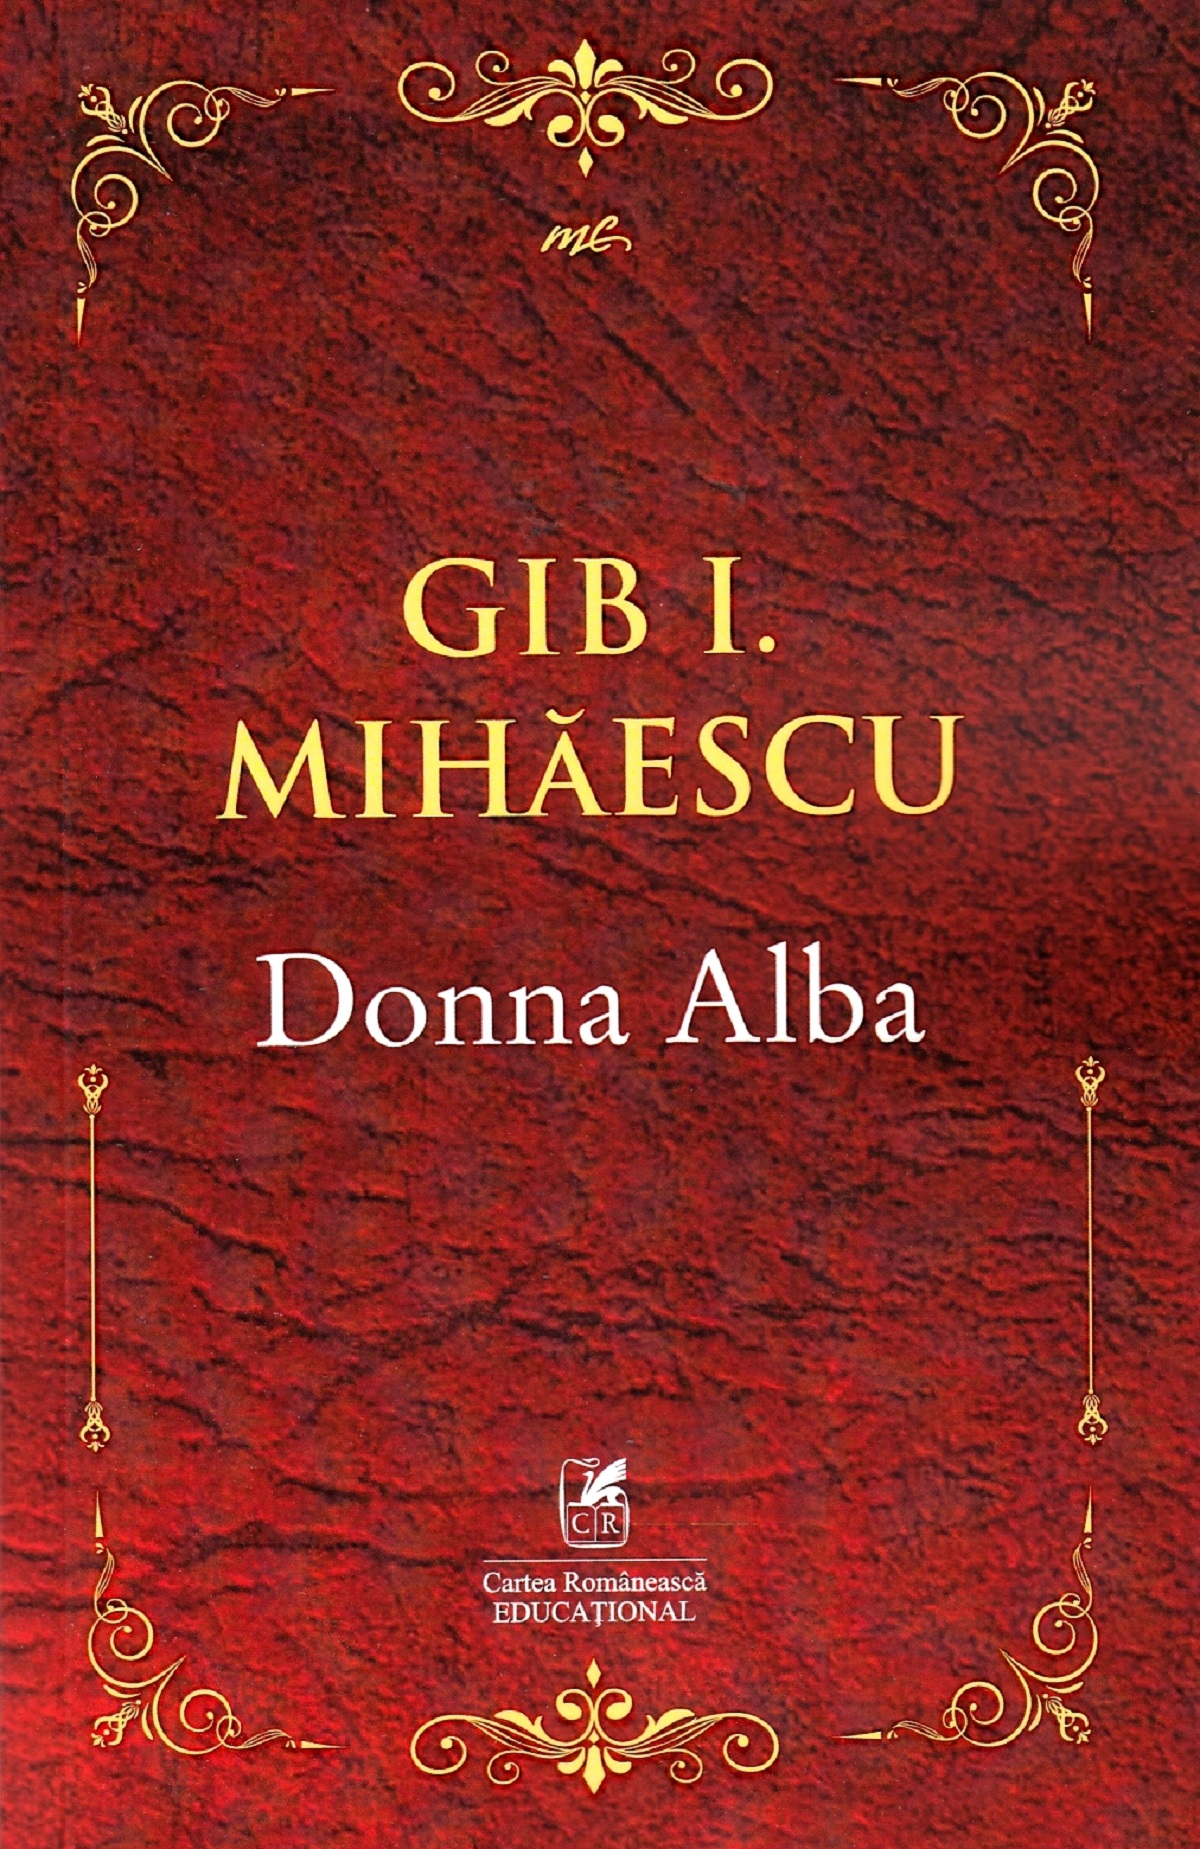 PDF Donna Alba | Gib I. Mihaescu Cartea Romaneasca educational Carte